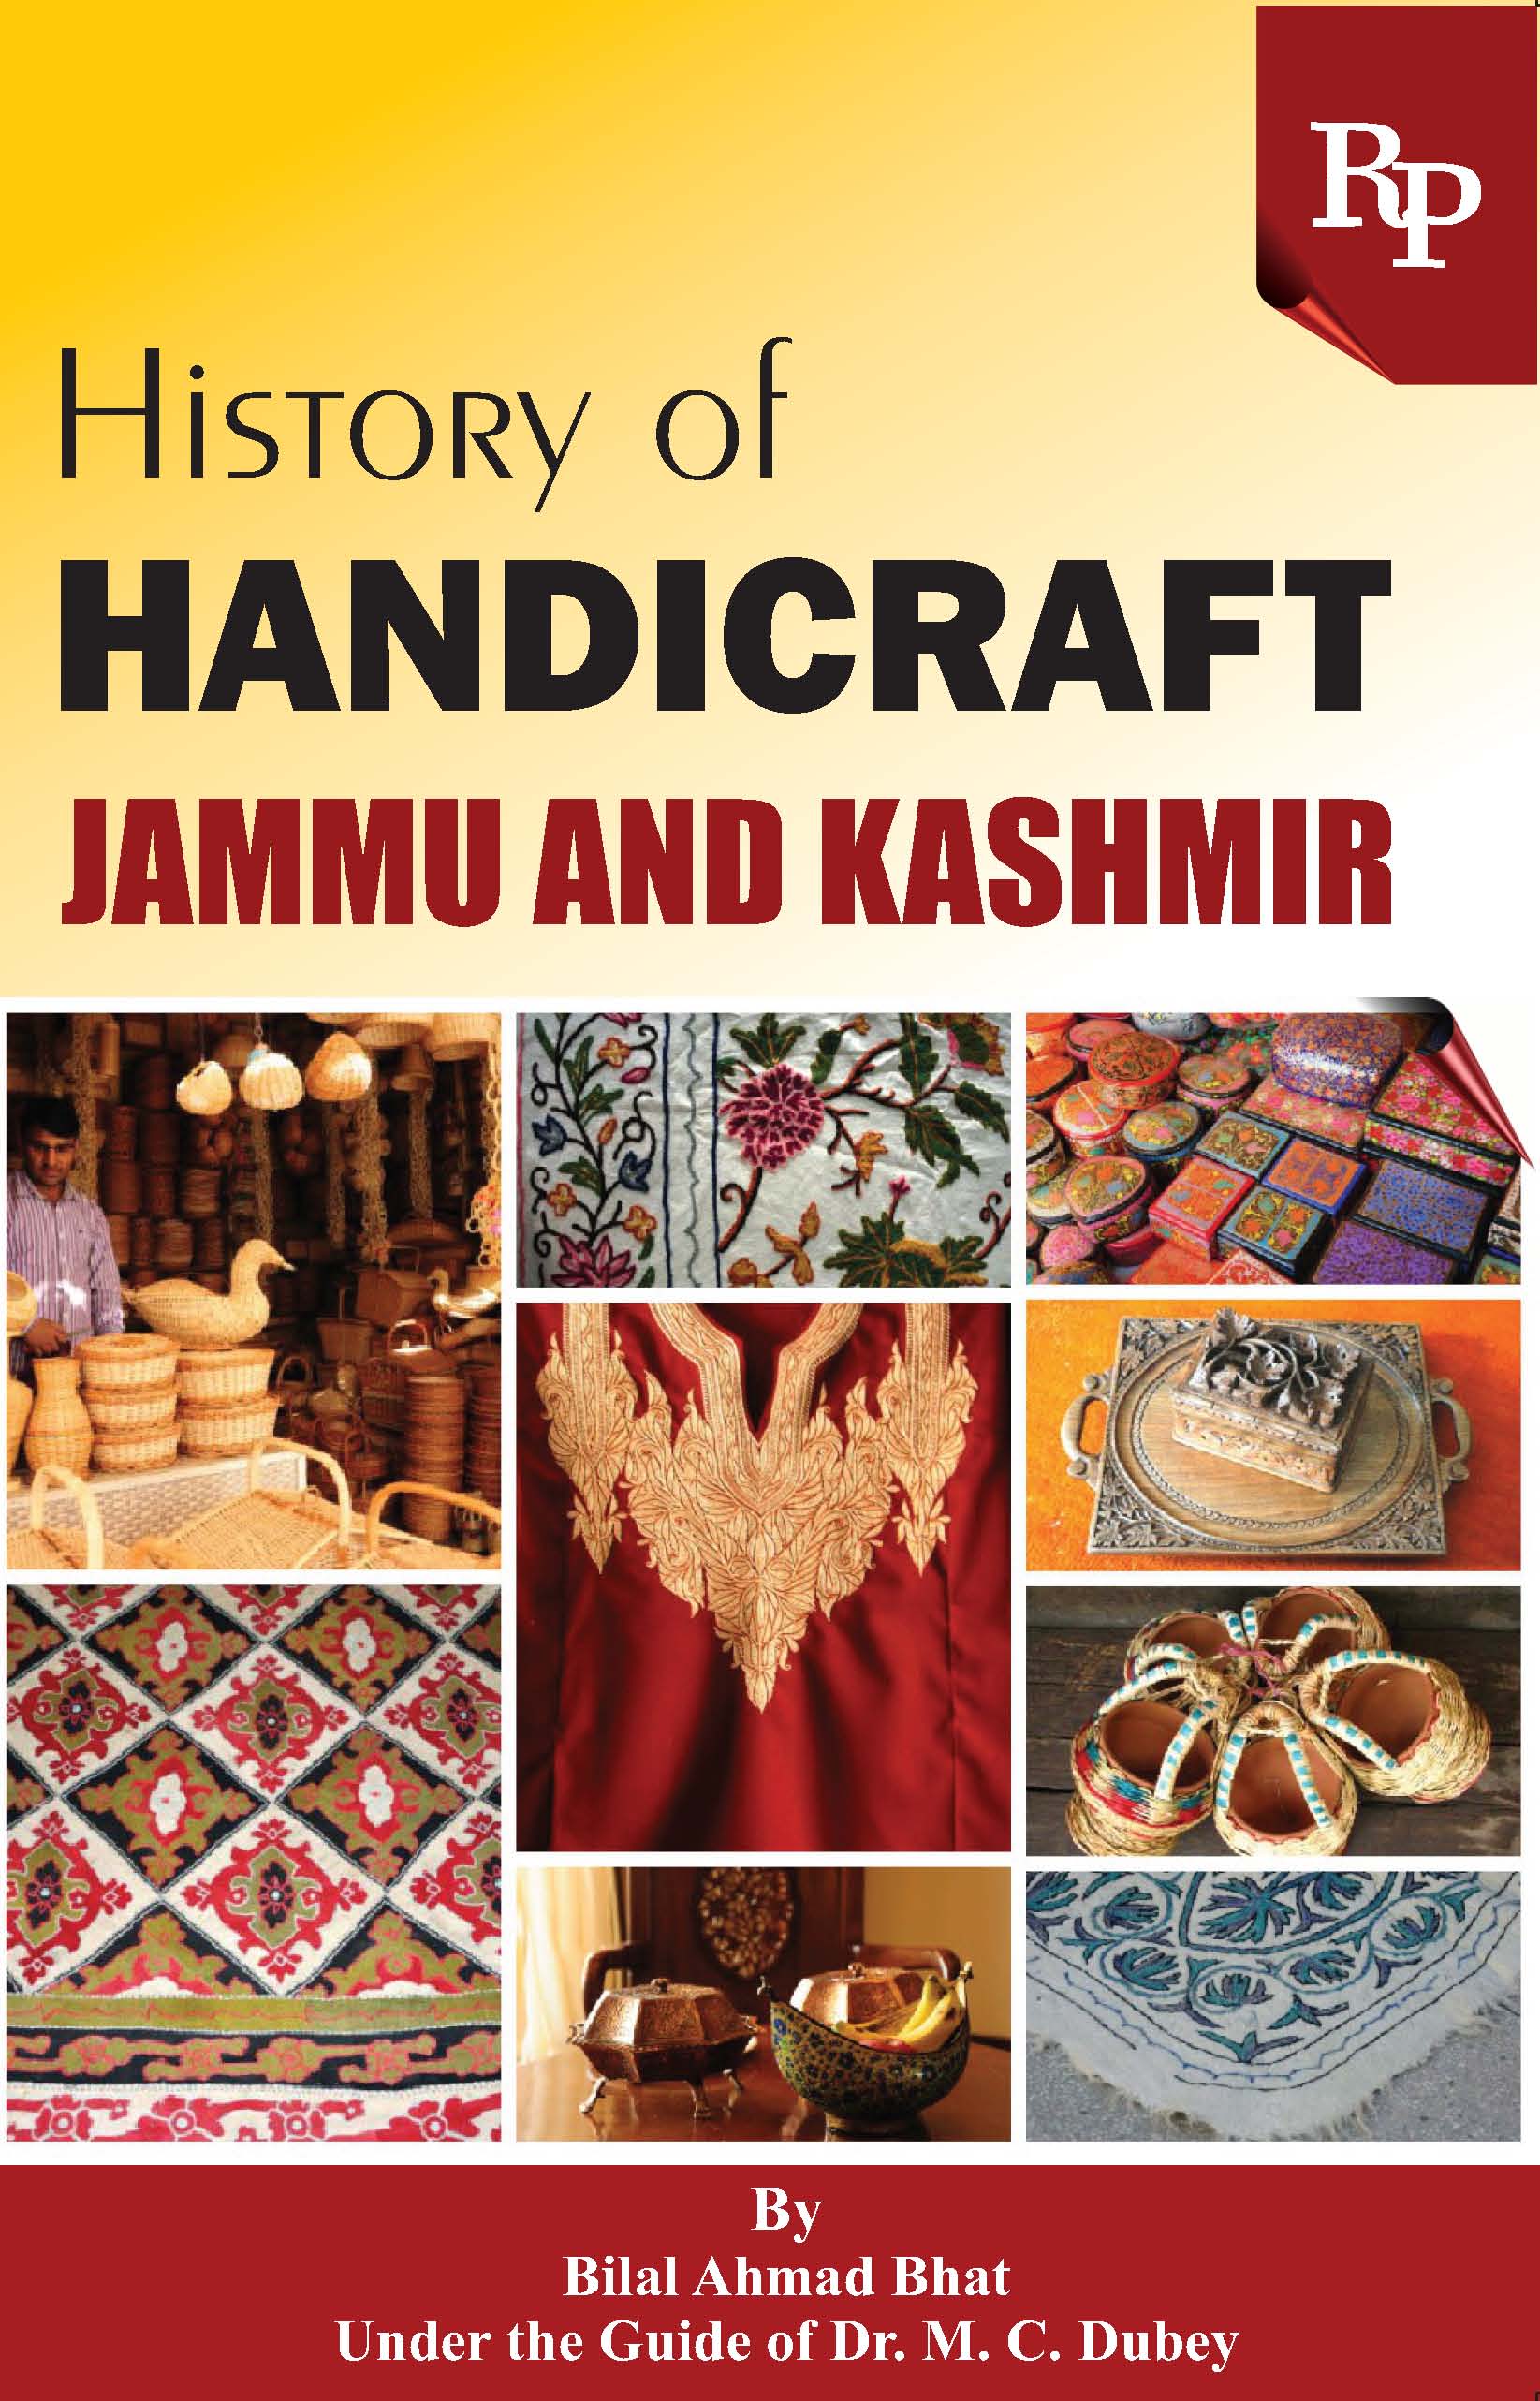 history of handicraft Jammu and kashmir cover.jpg